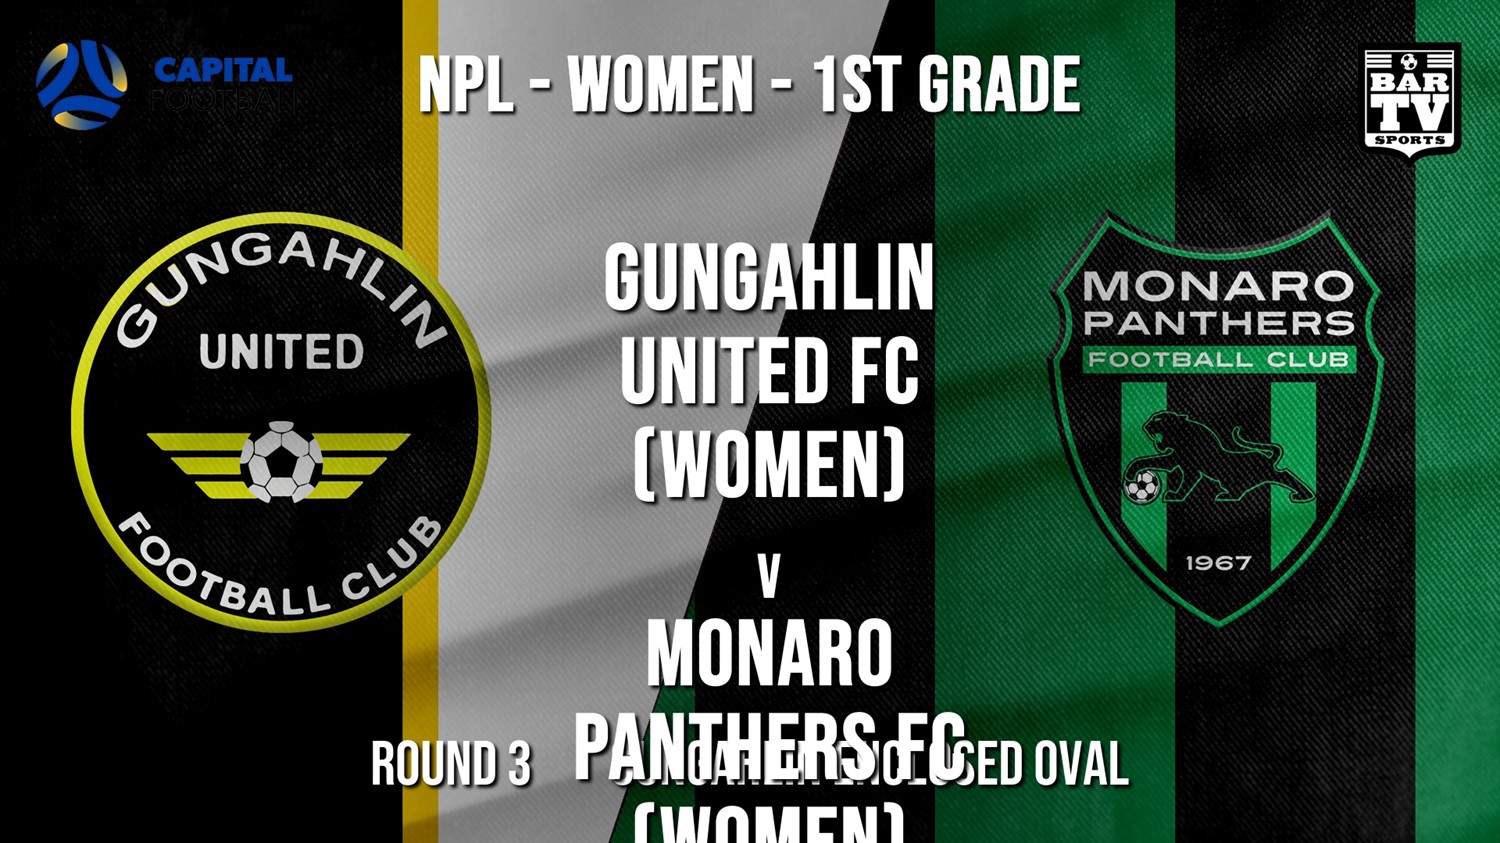 NPLW - Capital Round 3 - Gungahlin United FC (women) v Monaro Panthers FC (women) Minigame Slate Image